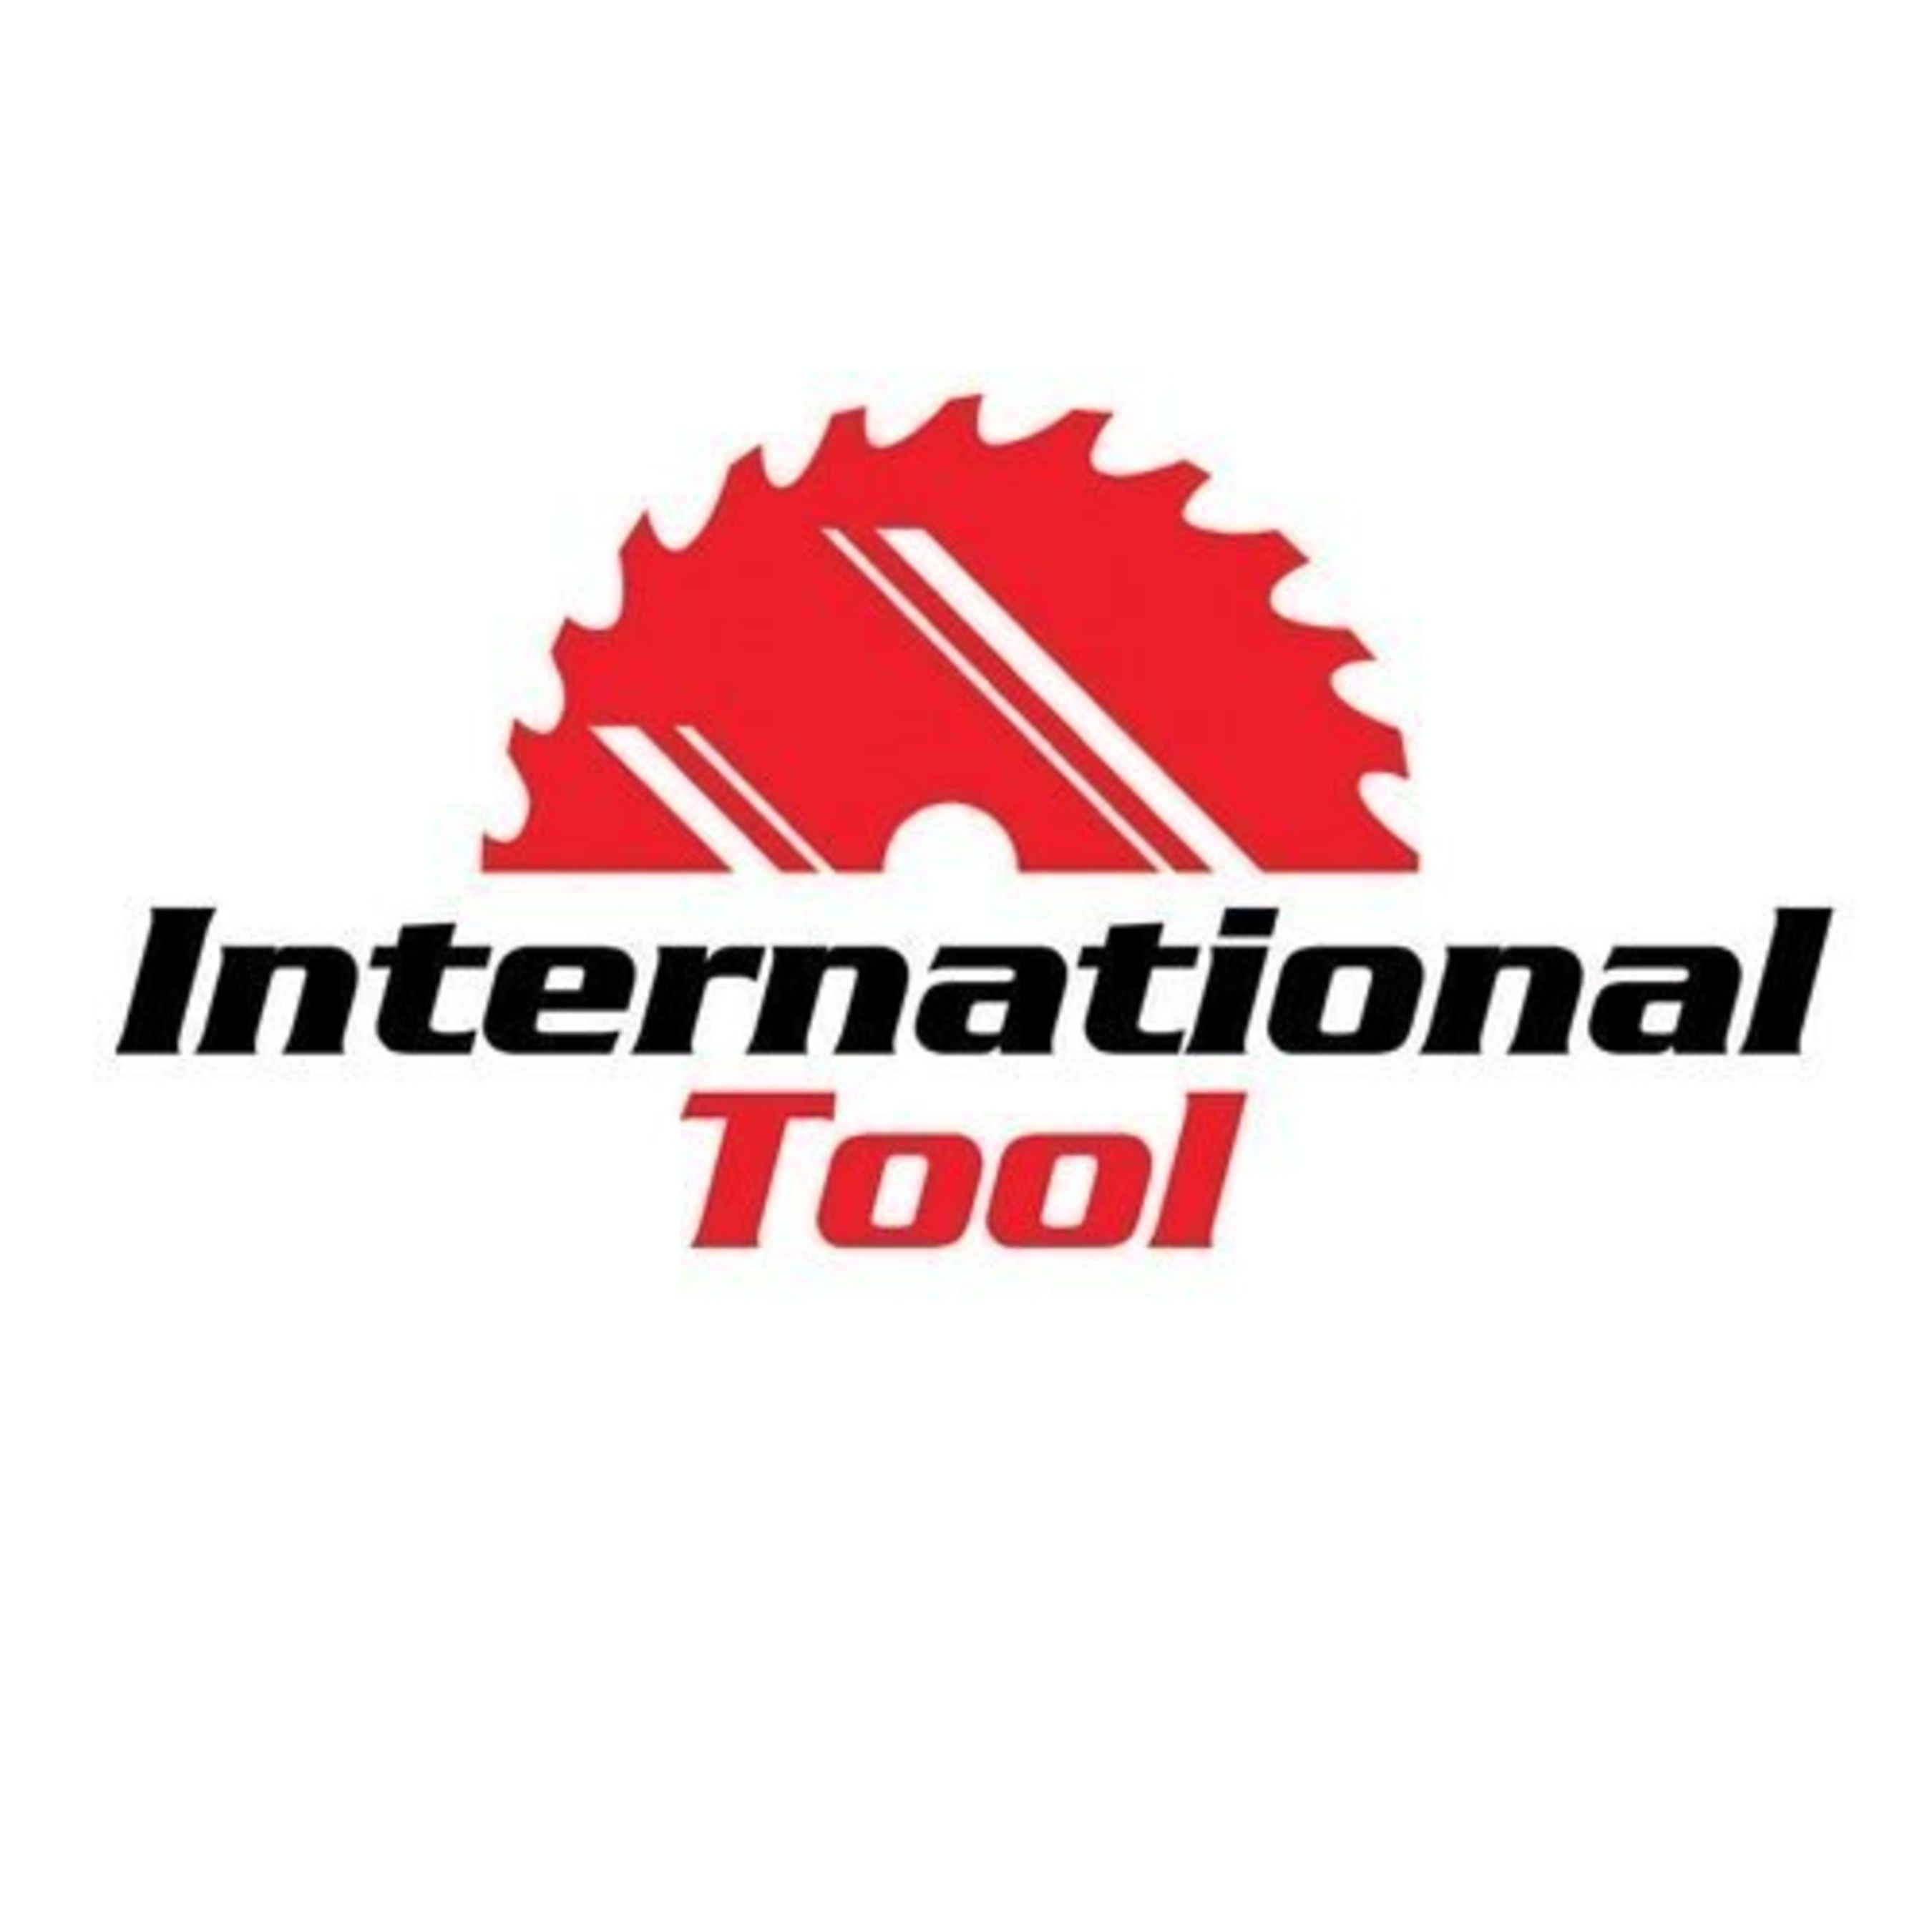 International Tool Announces Launch of Louis Wild Memorial Scholarship